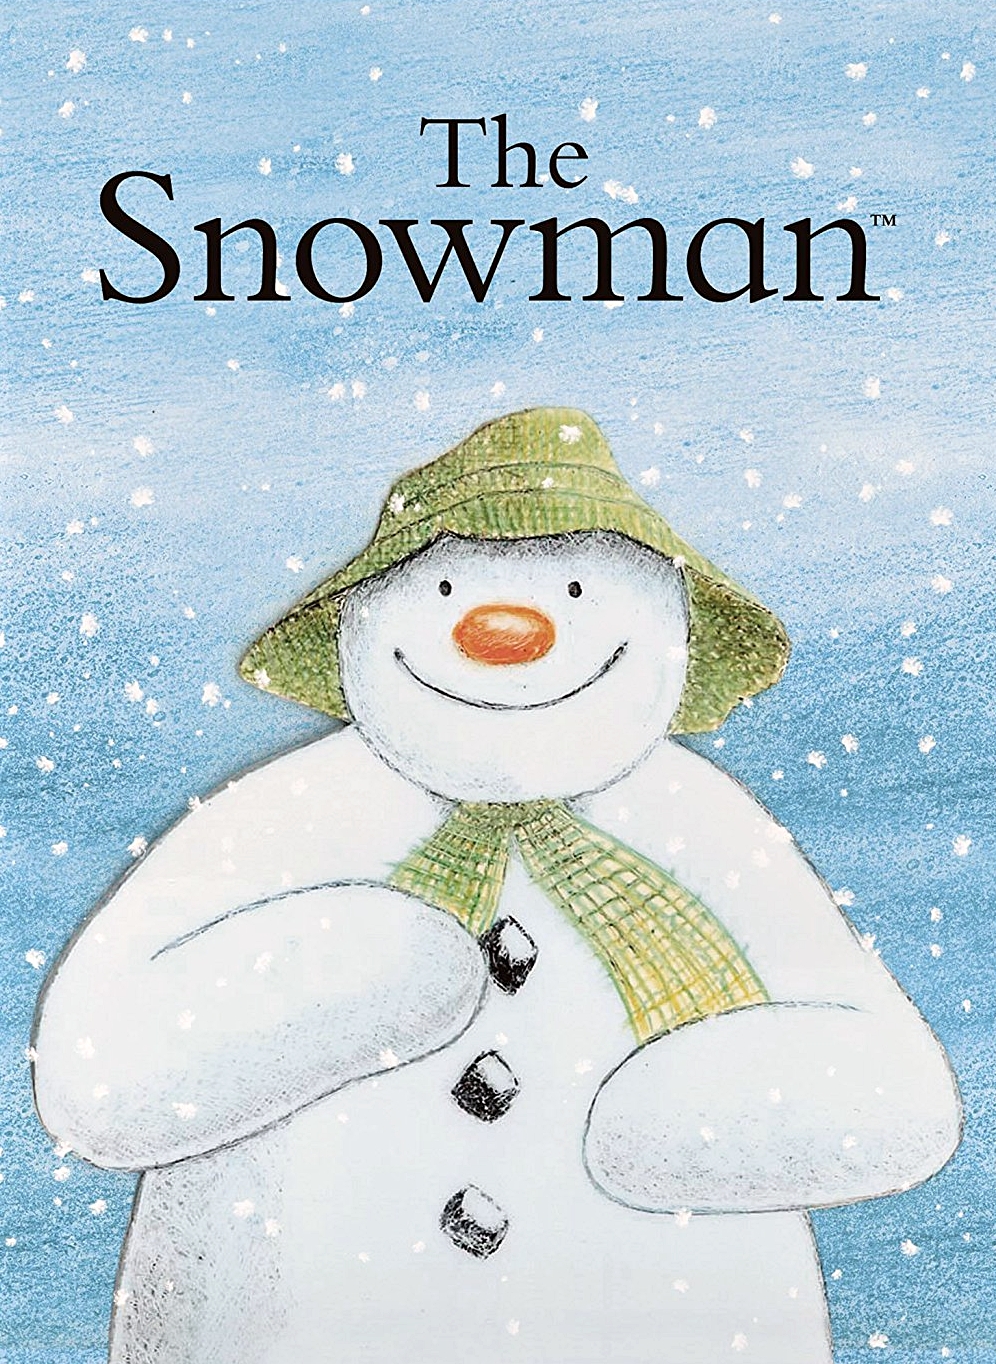 Nonton film The Snowman layarkaca21 indoxx1 ganool online streaming terbaru